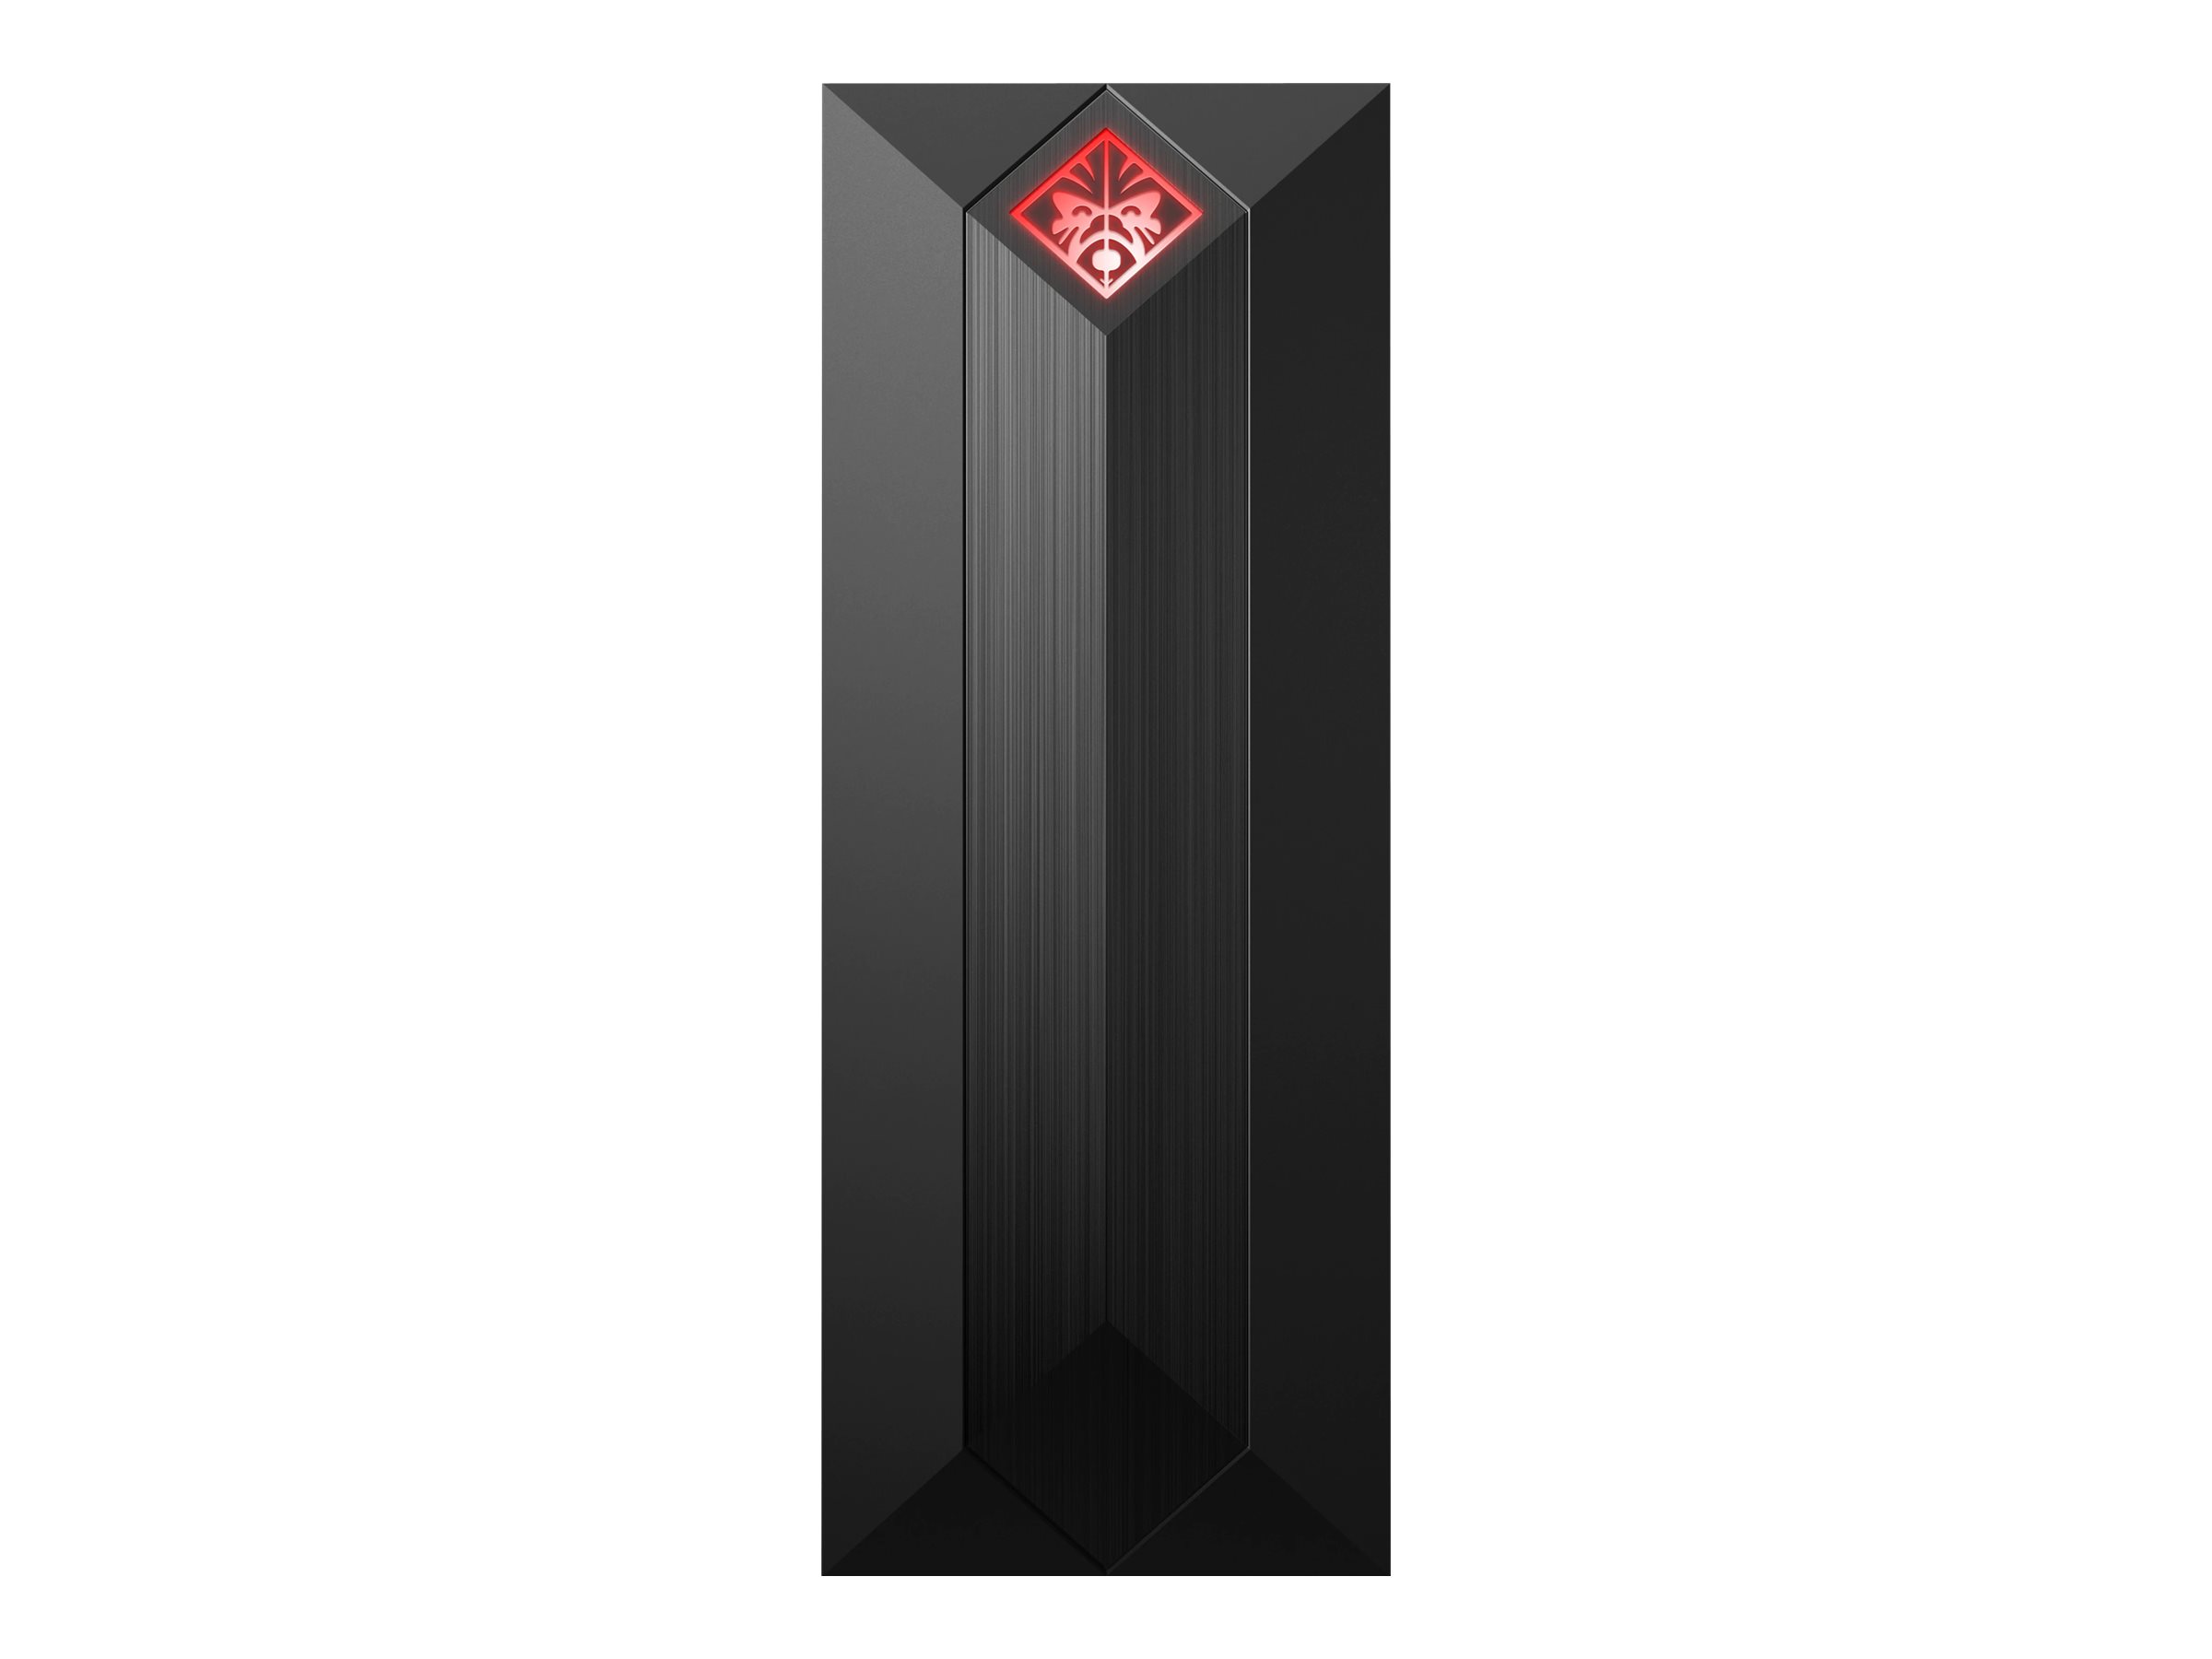 HP OMEN Obelisk Review: Great Value for a High-Performance Gaming Desktop